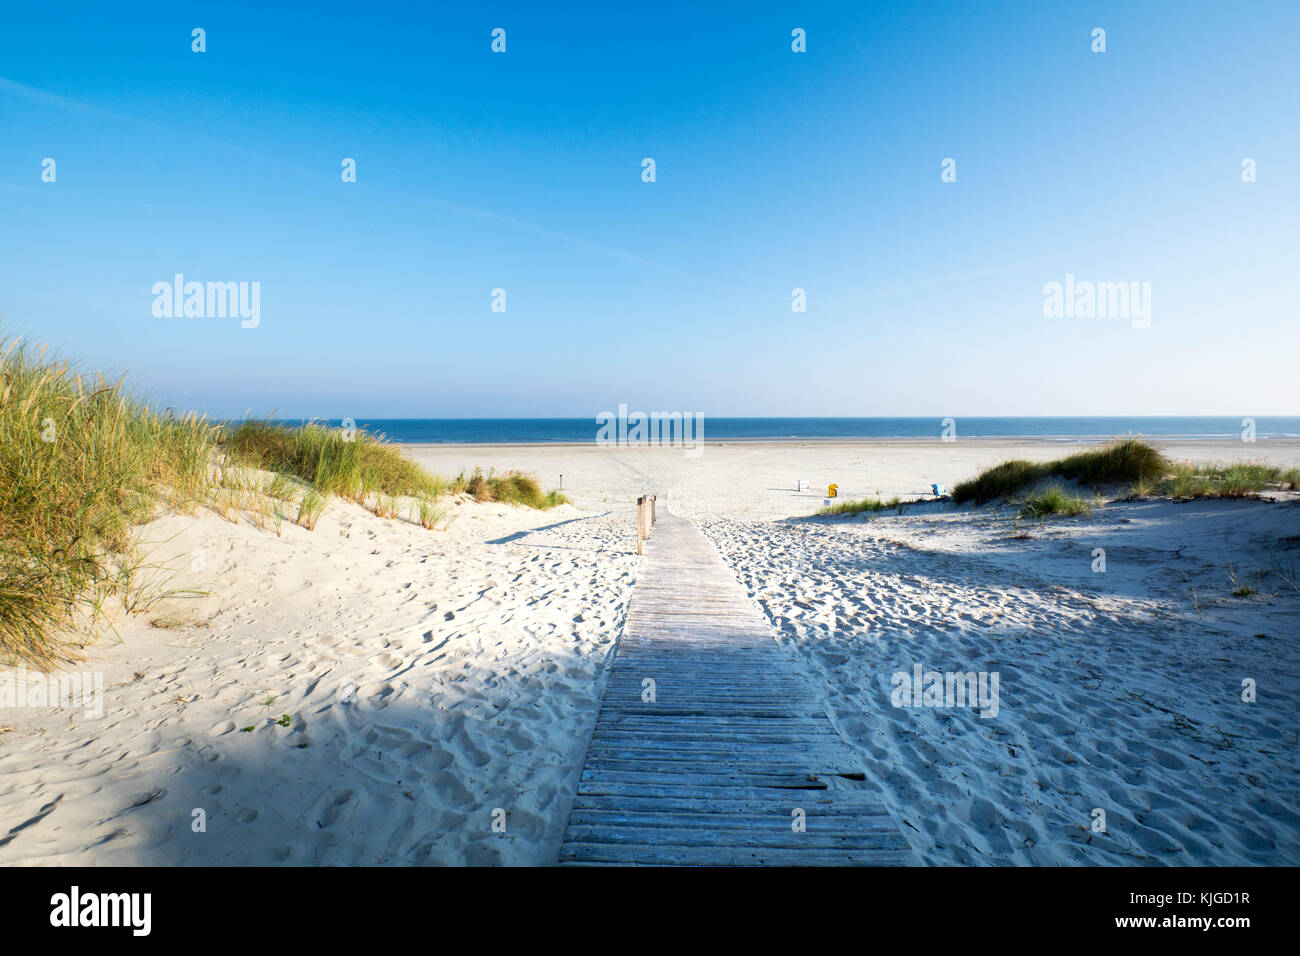 Germany, Lower Saxony, East Frisian Island, Juist, dune and beach landscape Stock Photo